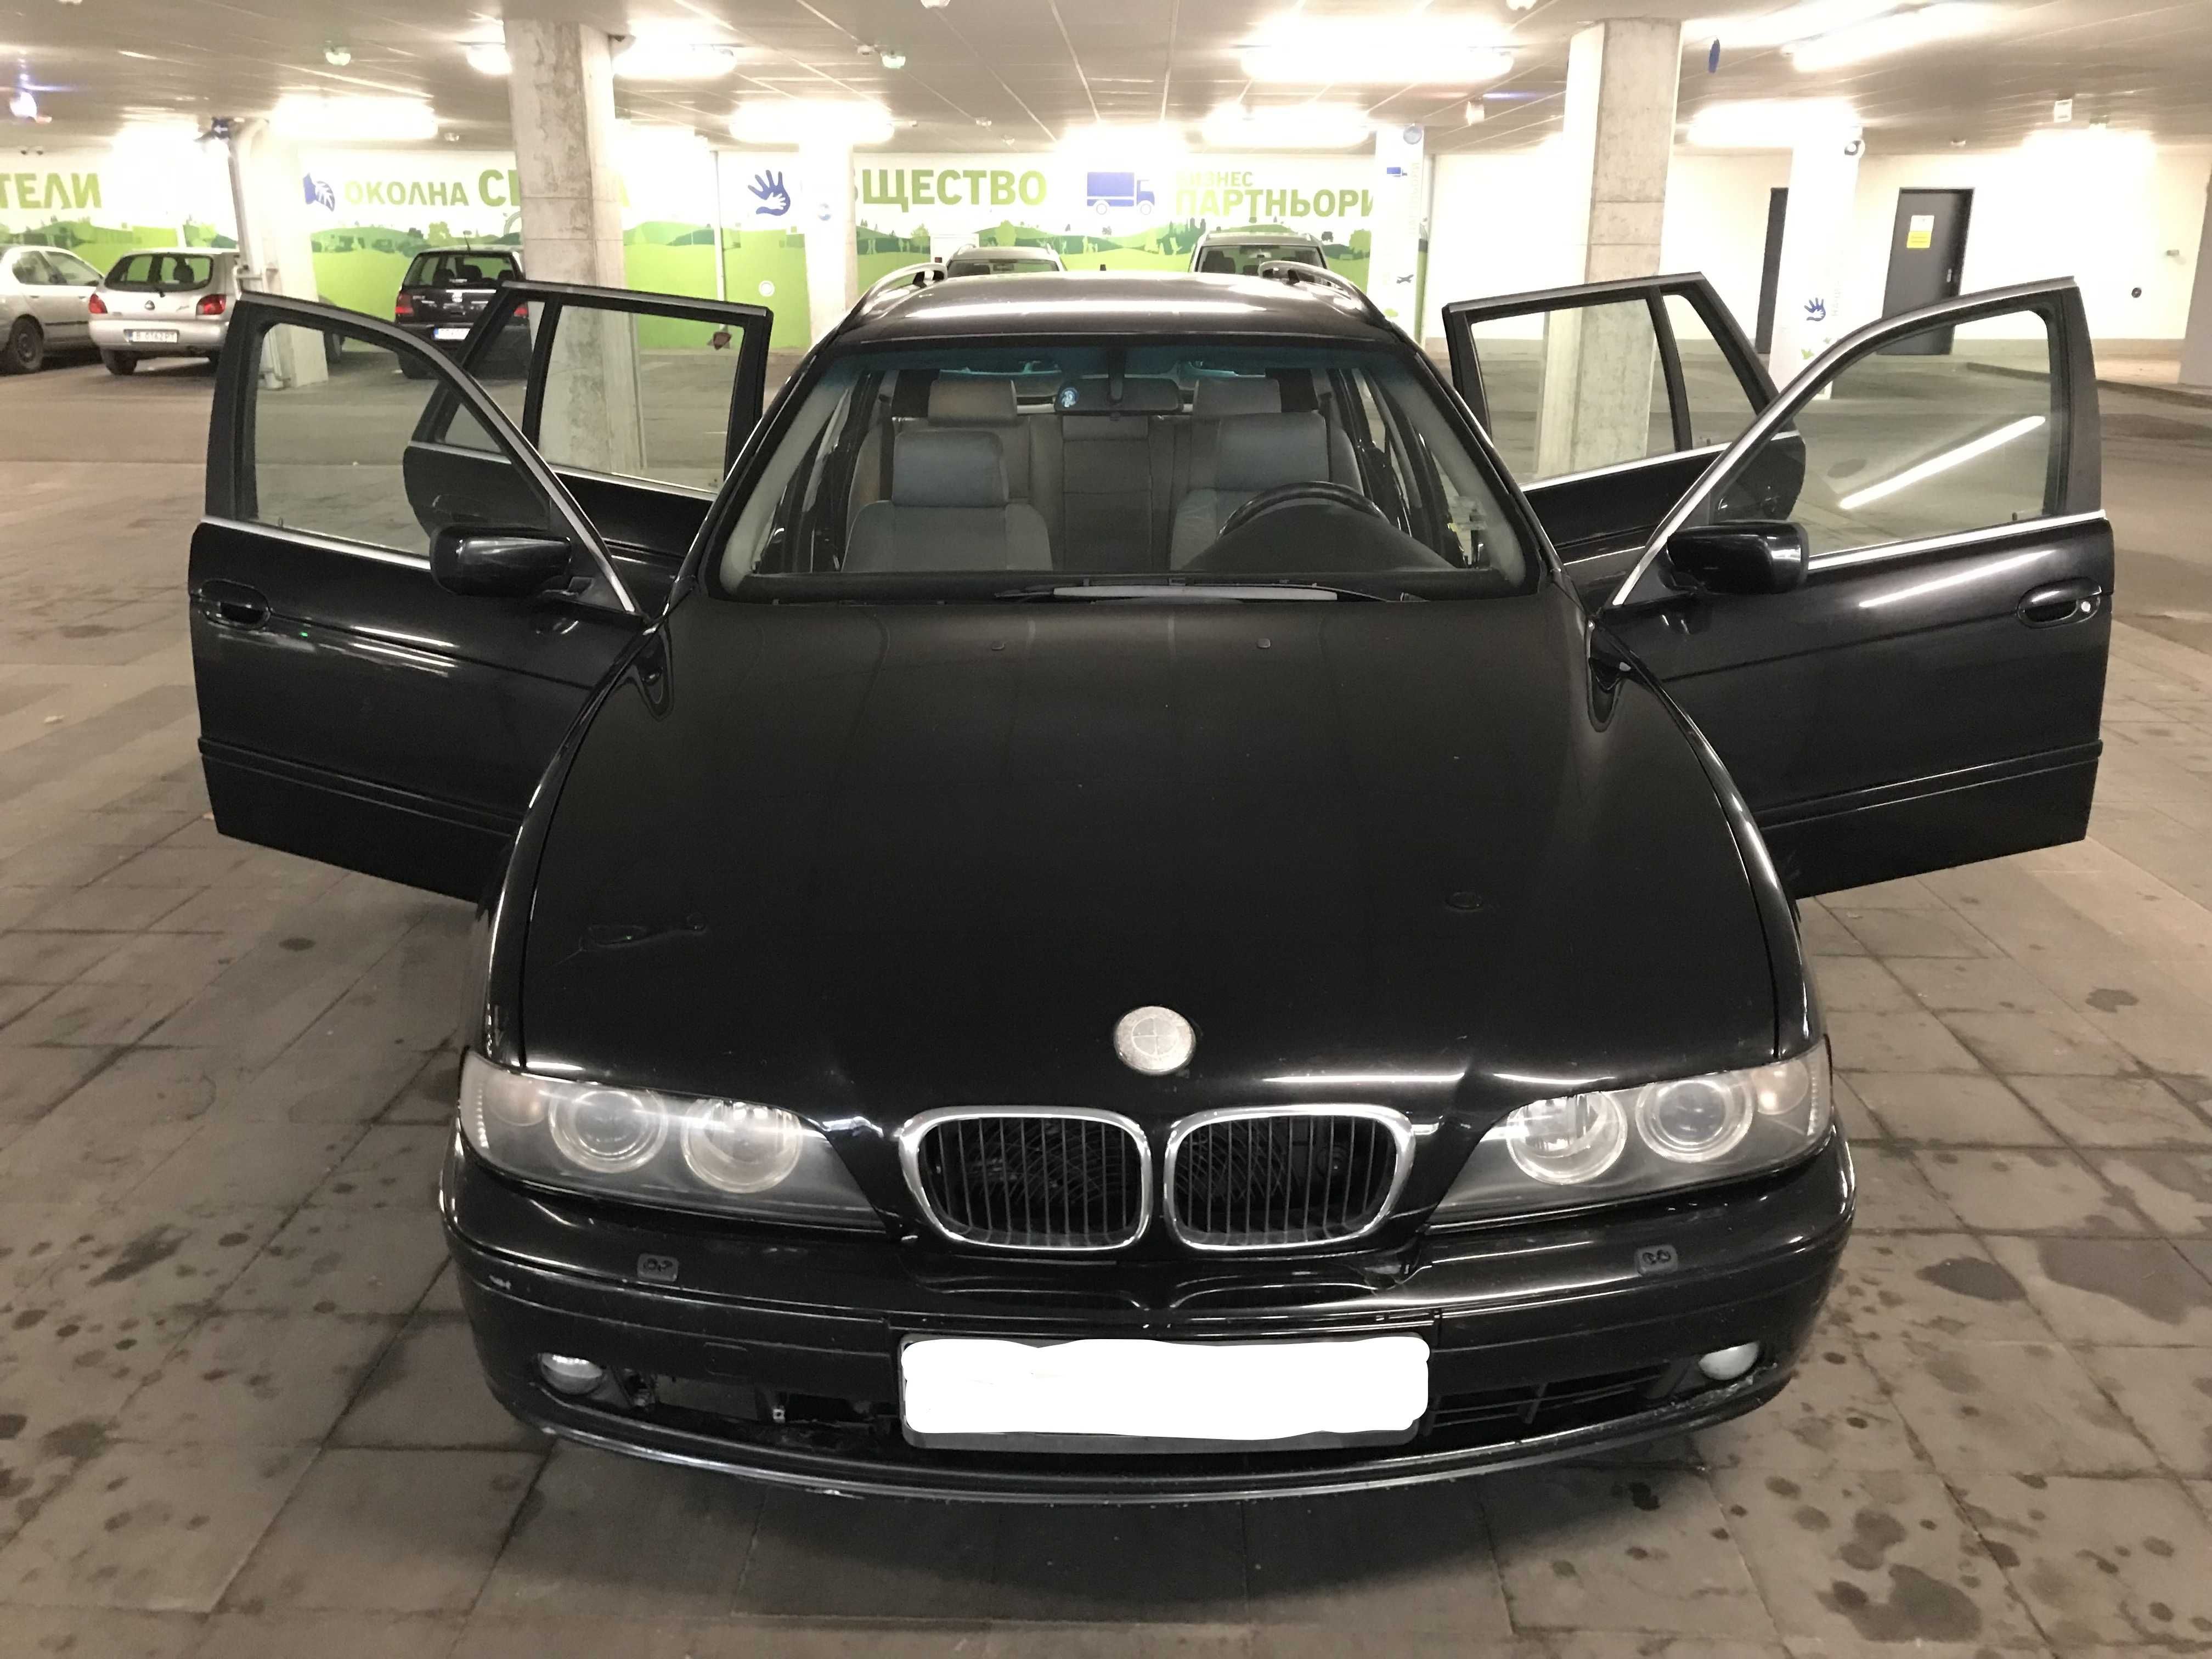 BMW E39, 525 д, 2001г, автомат , комби, на части